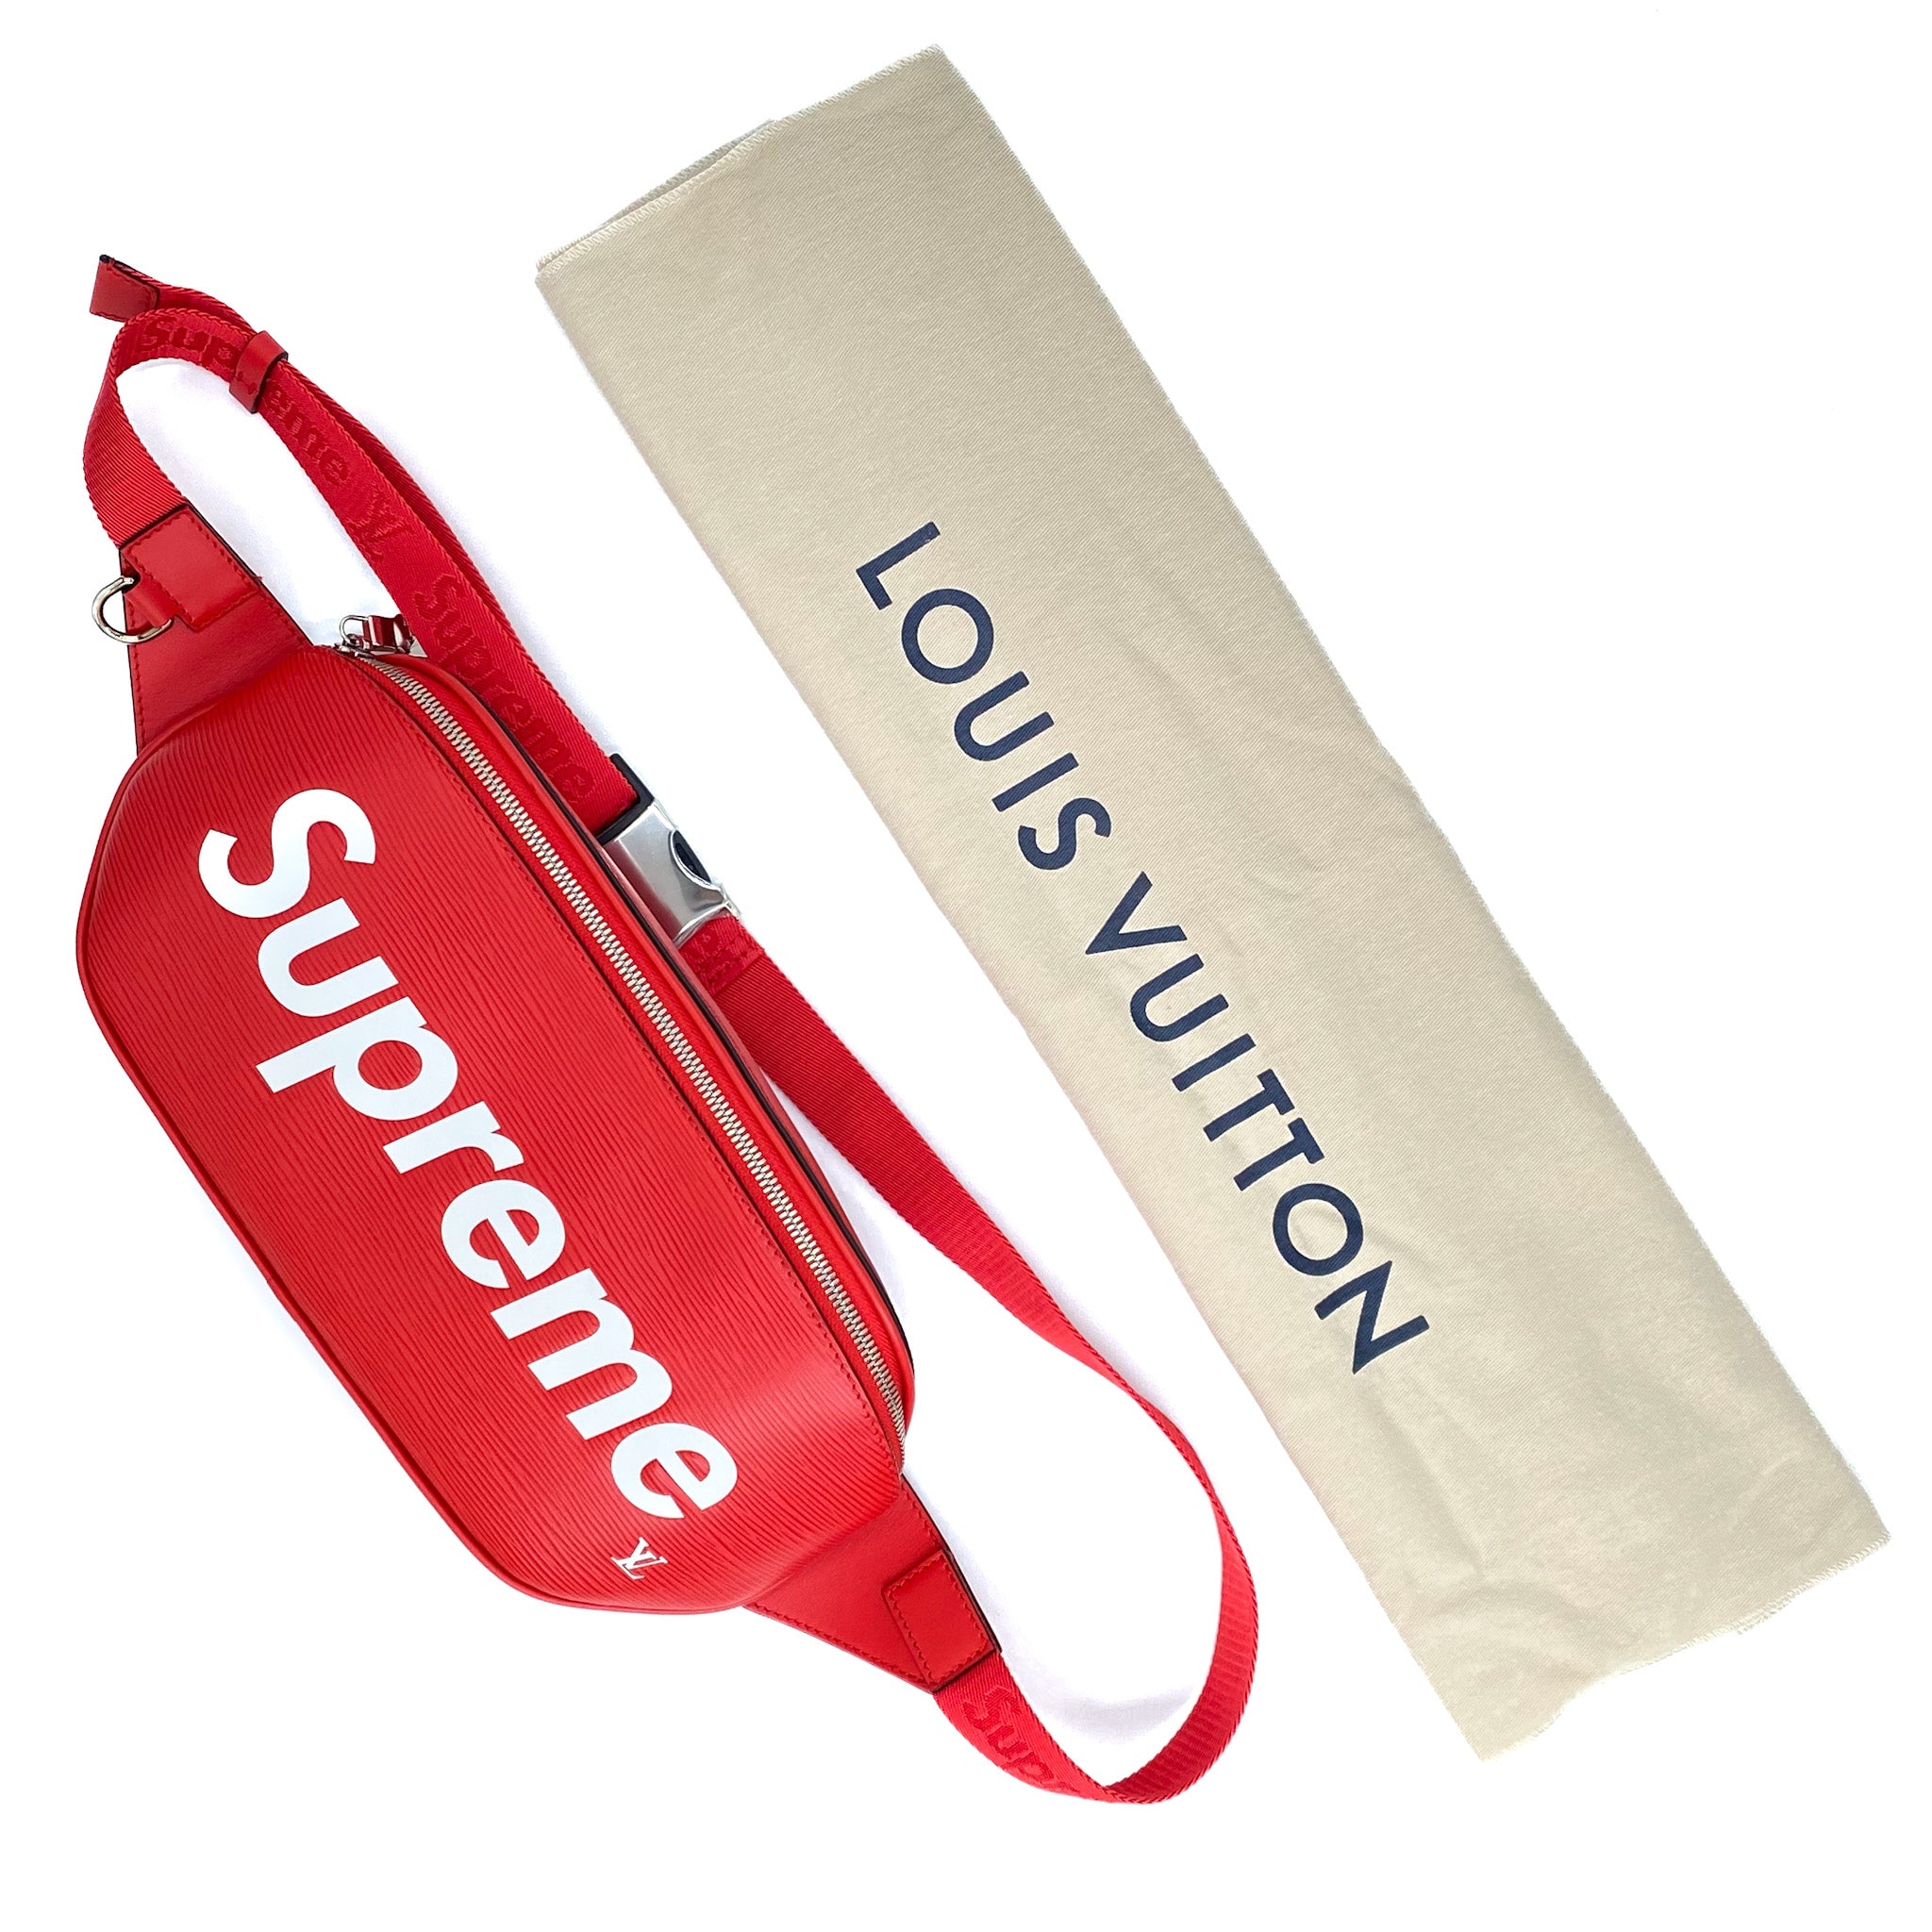 LOUIS VUITTON x SUPREME M53418 Epi Bum bag Waist pouch Belt bag Hip bag  body bag